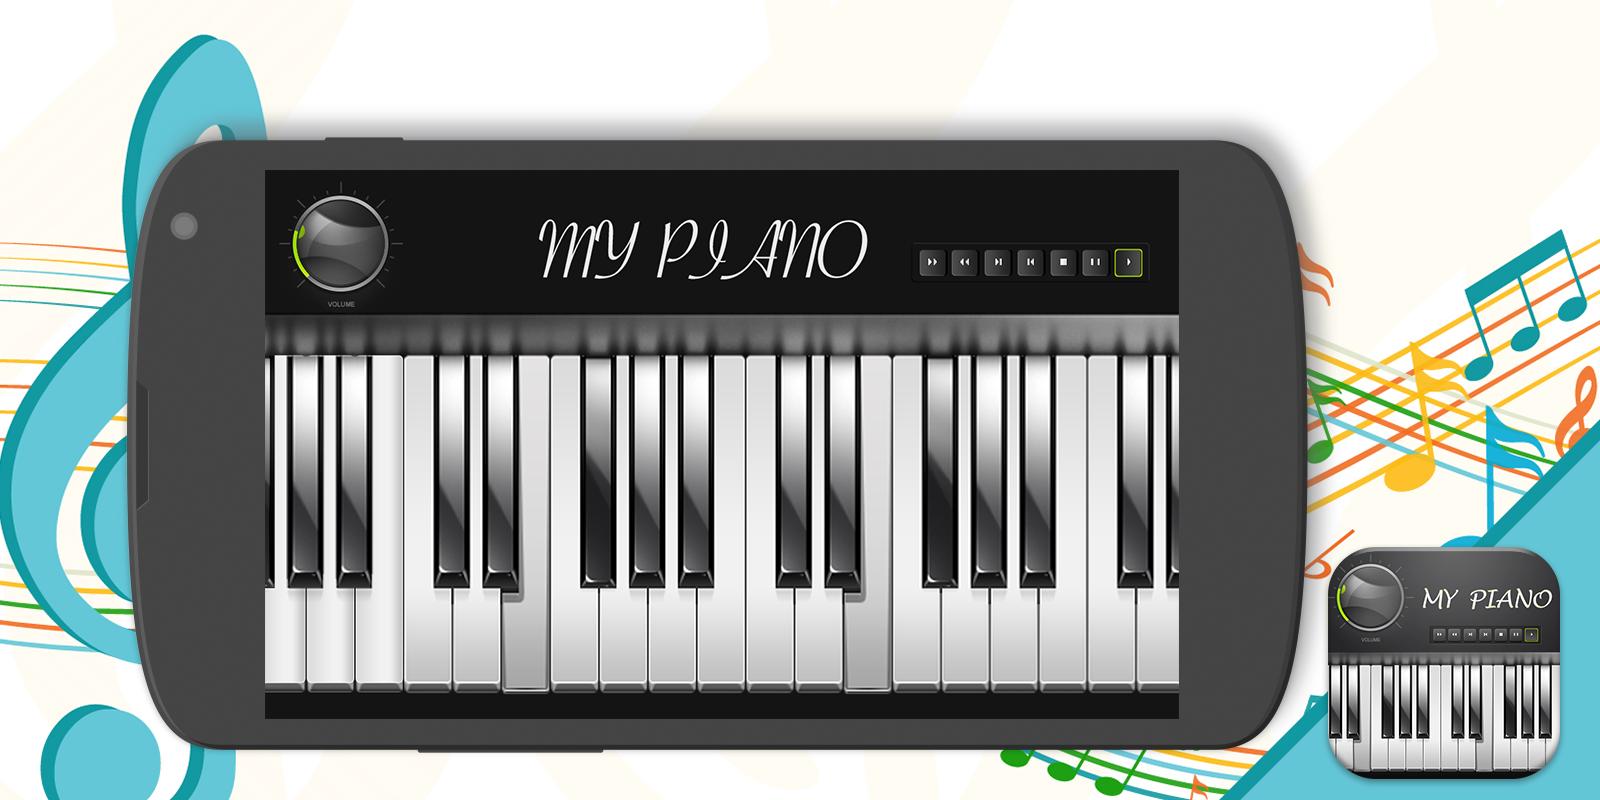 My Piano APK. Piano Virtual. Classic Piano Mod APK. Турецкий марш на виртуальном пианино. Включи piano classics